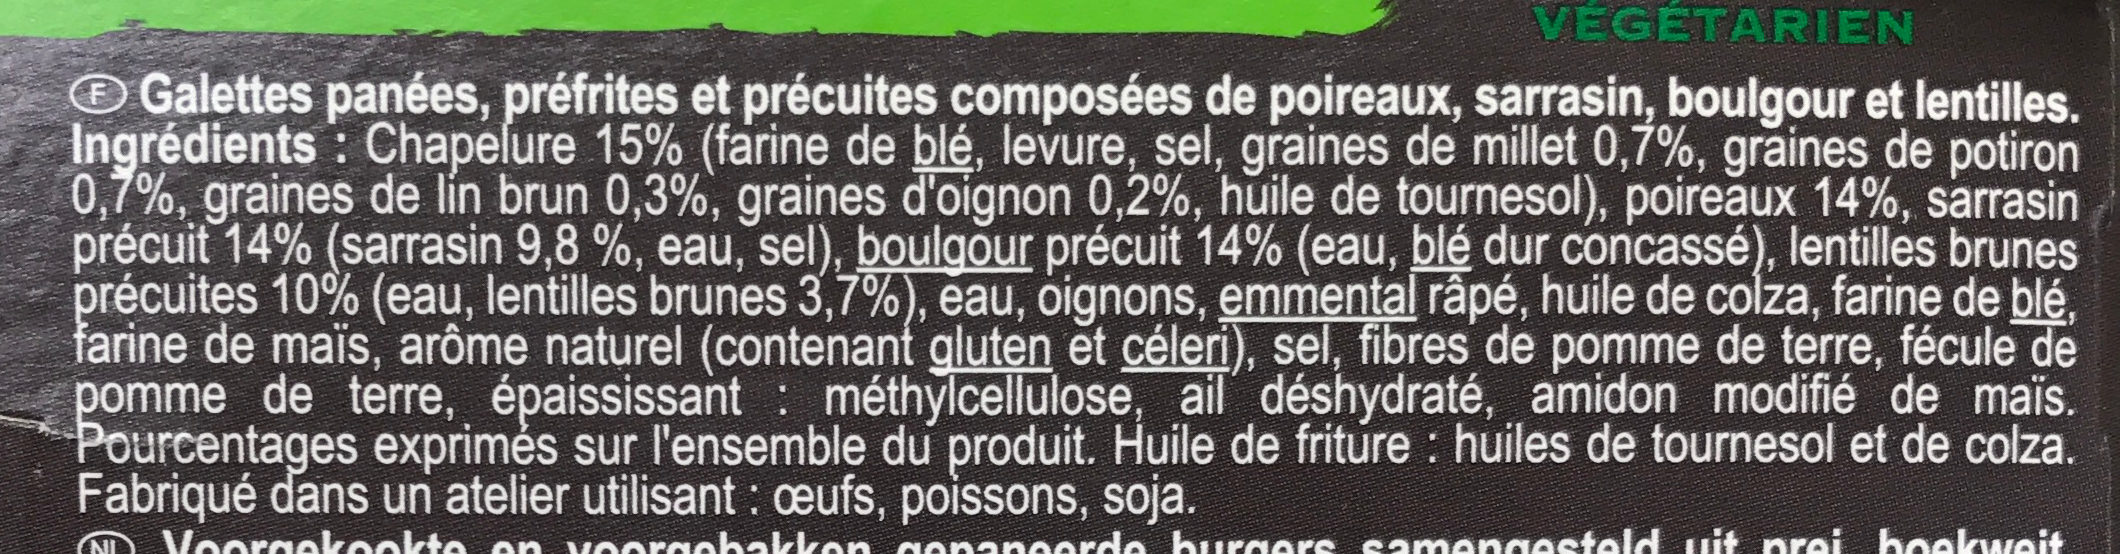 Galettes panées - Ingredienti - fr